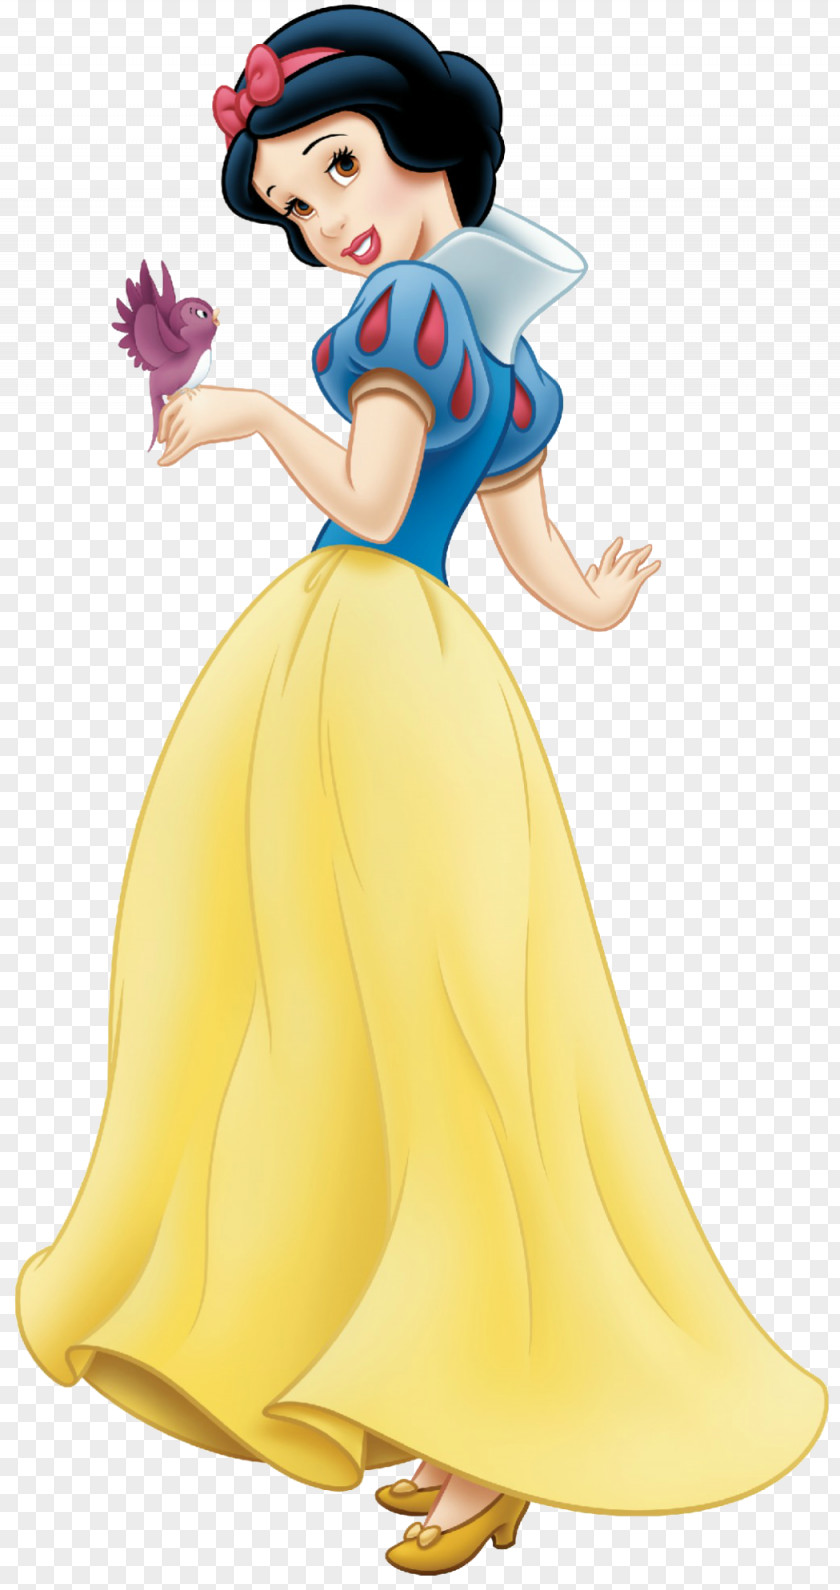 Snow White And The Seven Dwarfs Tiana Rapunzel Disney Princess PNG